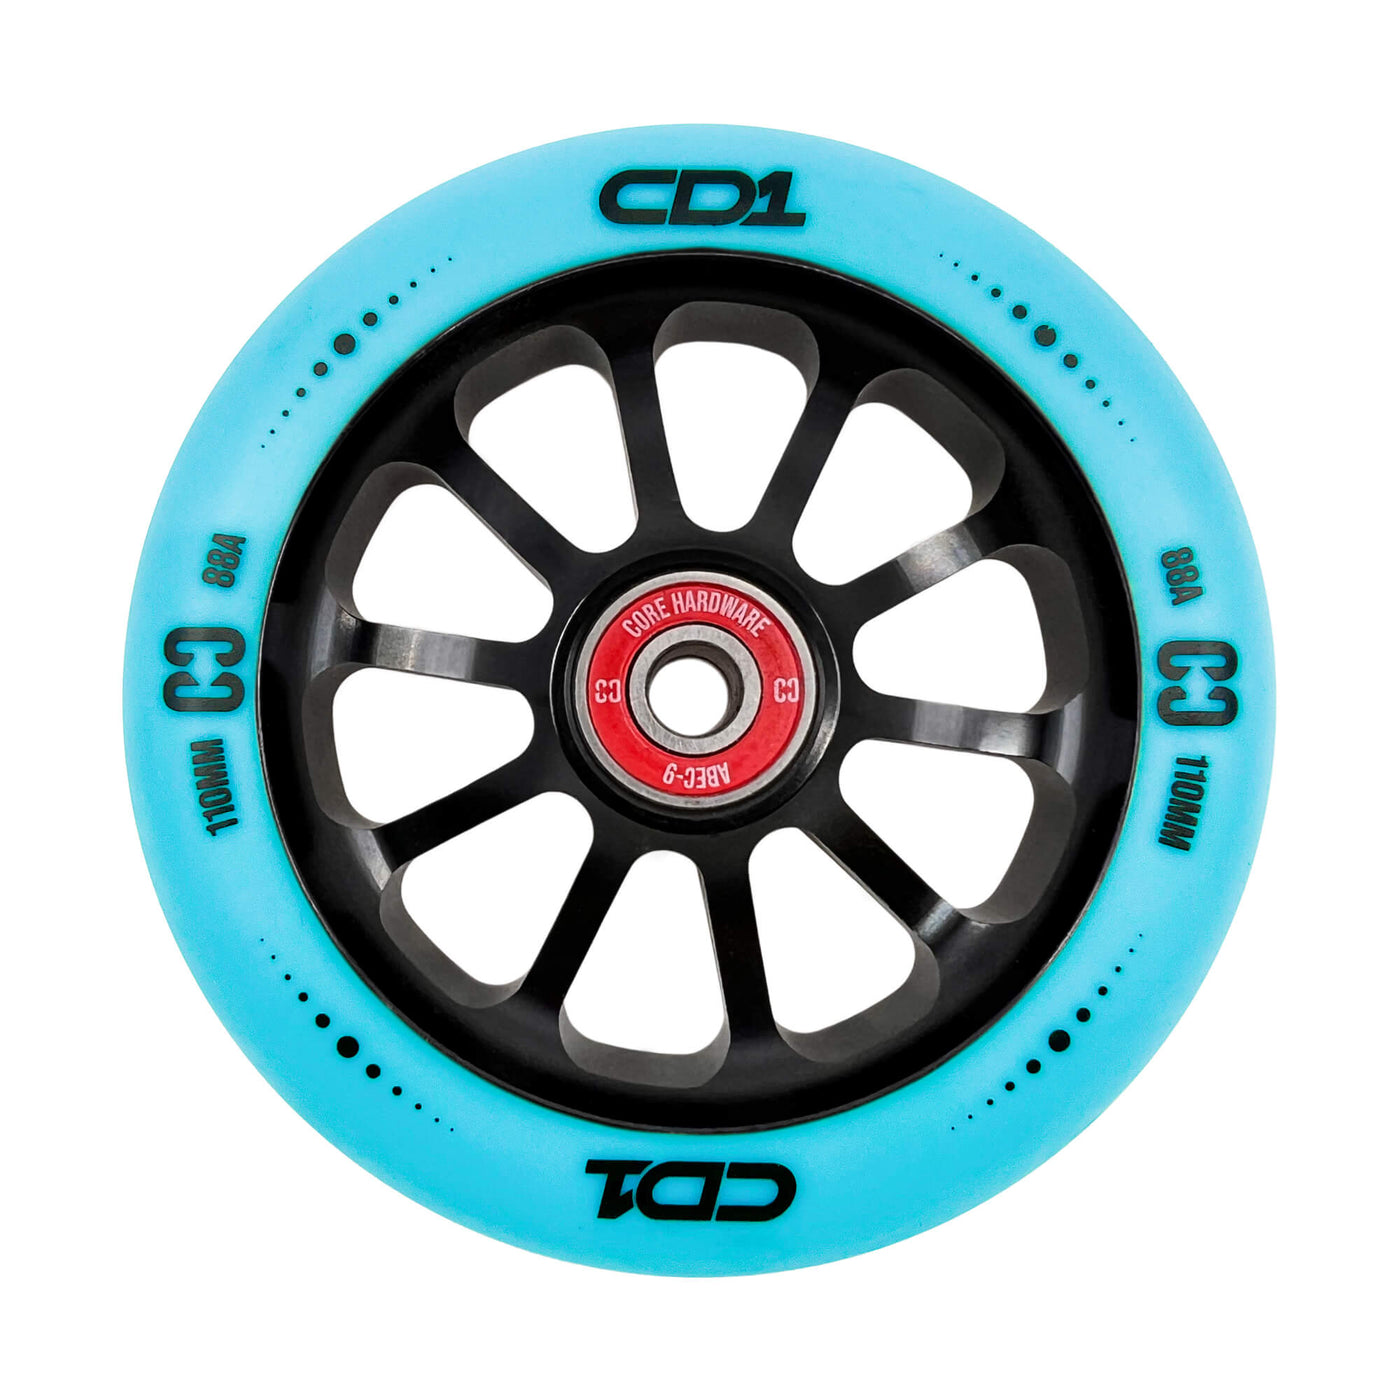 CORE CD1 Speichen-Stunt-Scooter-Rad 110 mm – Limettengrün/Blau